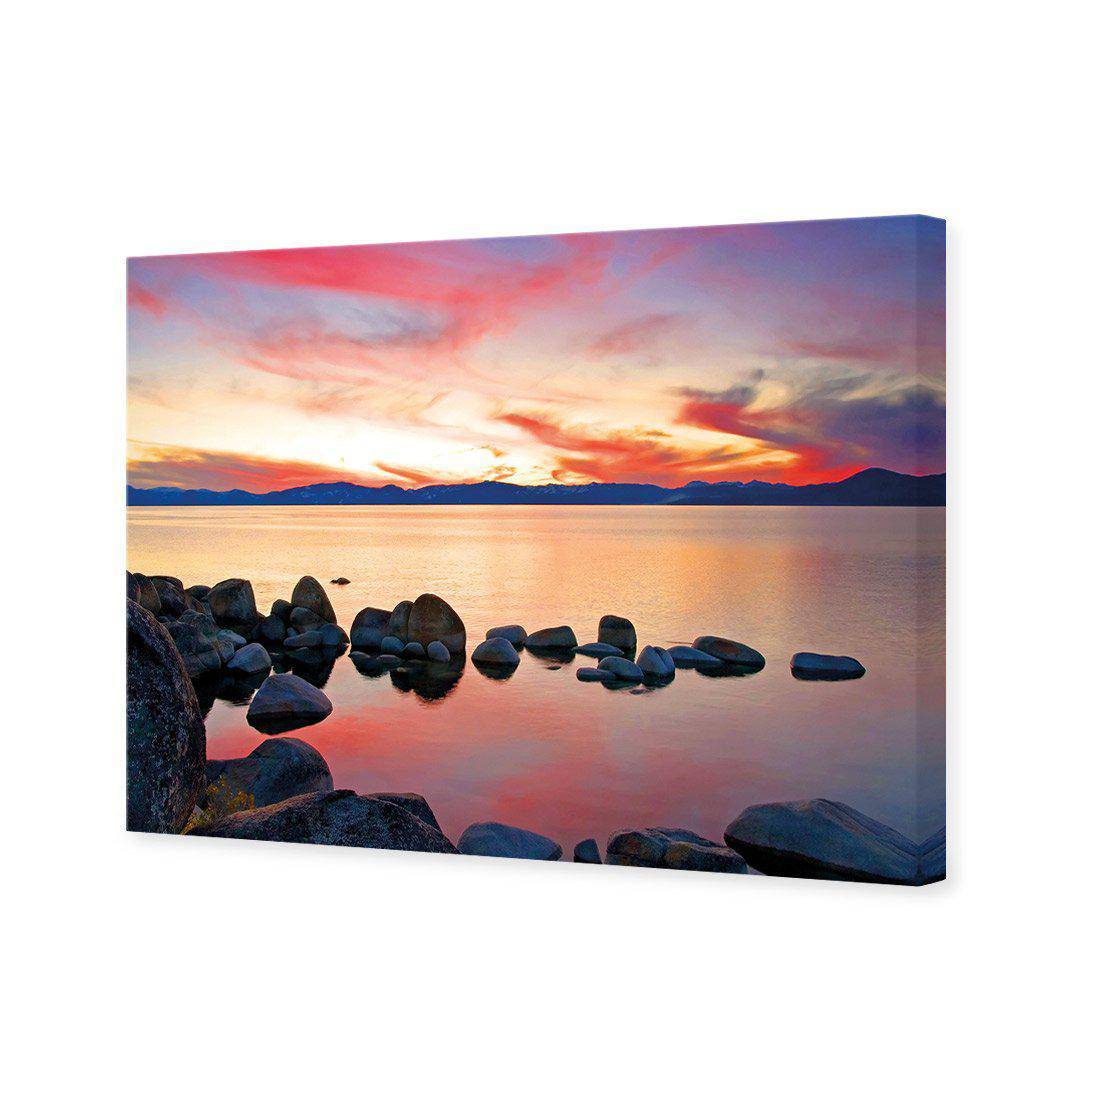 Sunset Calm Waters Canvas Art-Canvas-Wall Art Designs-45x30cm-Canvas - No Frame-Wall Art Designs